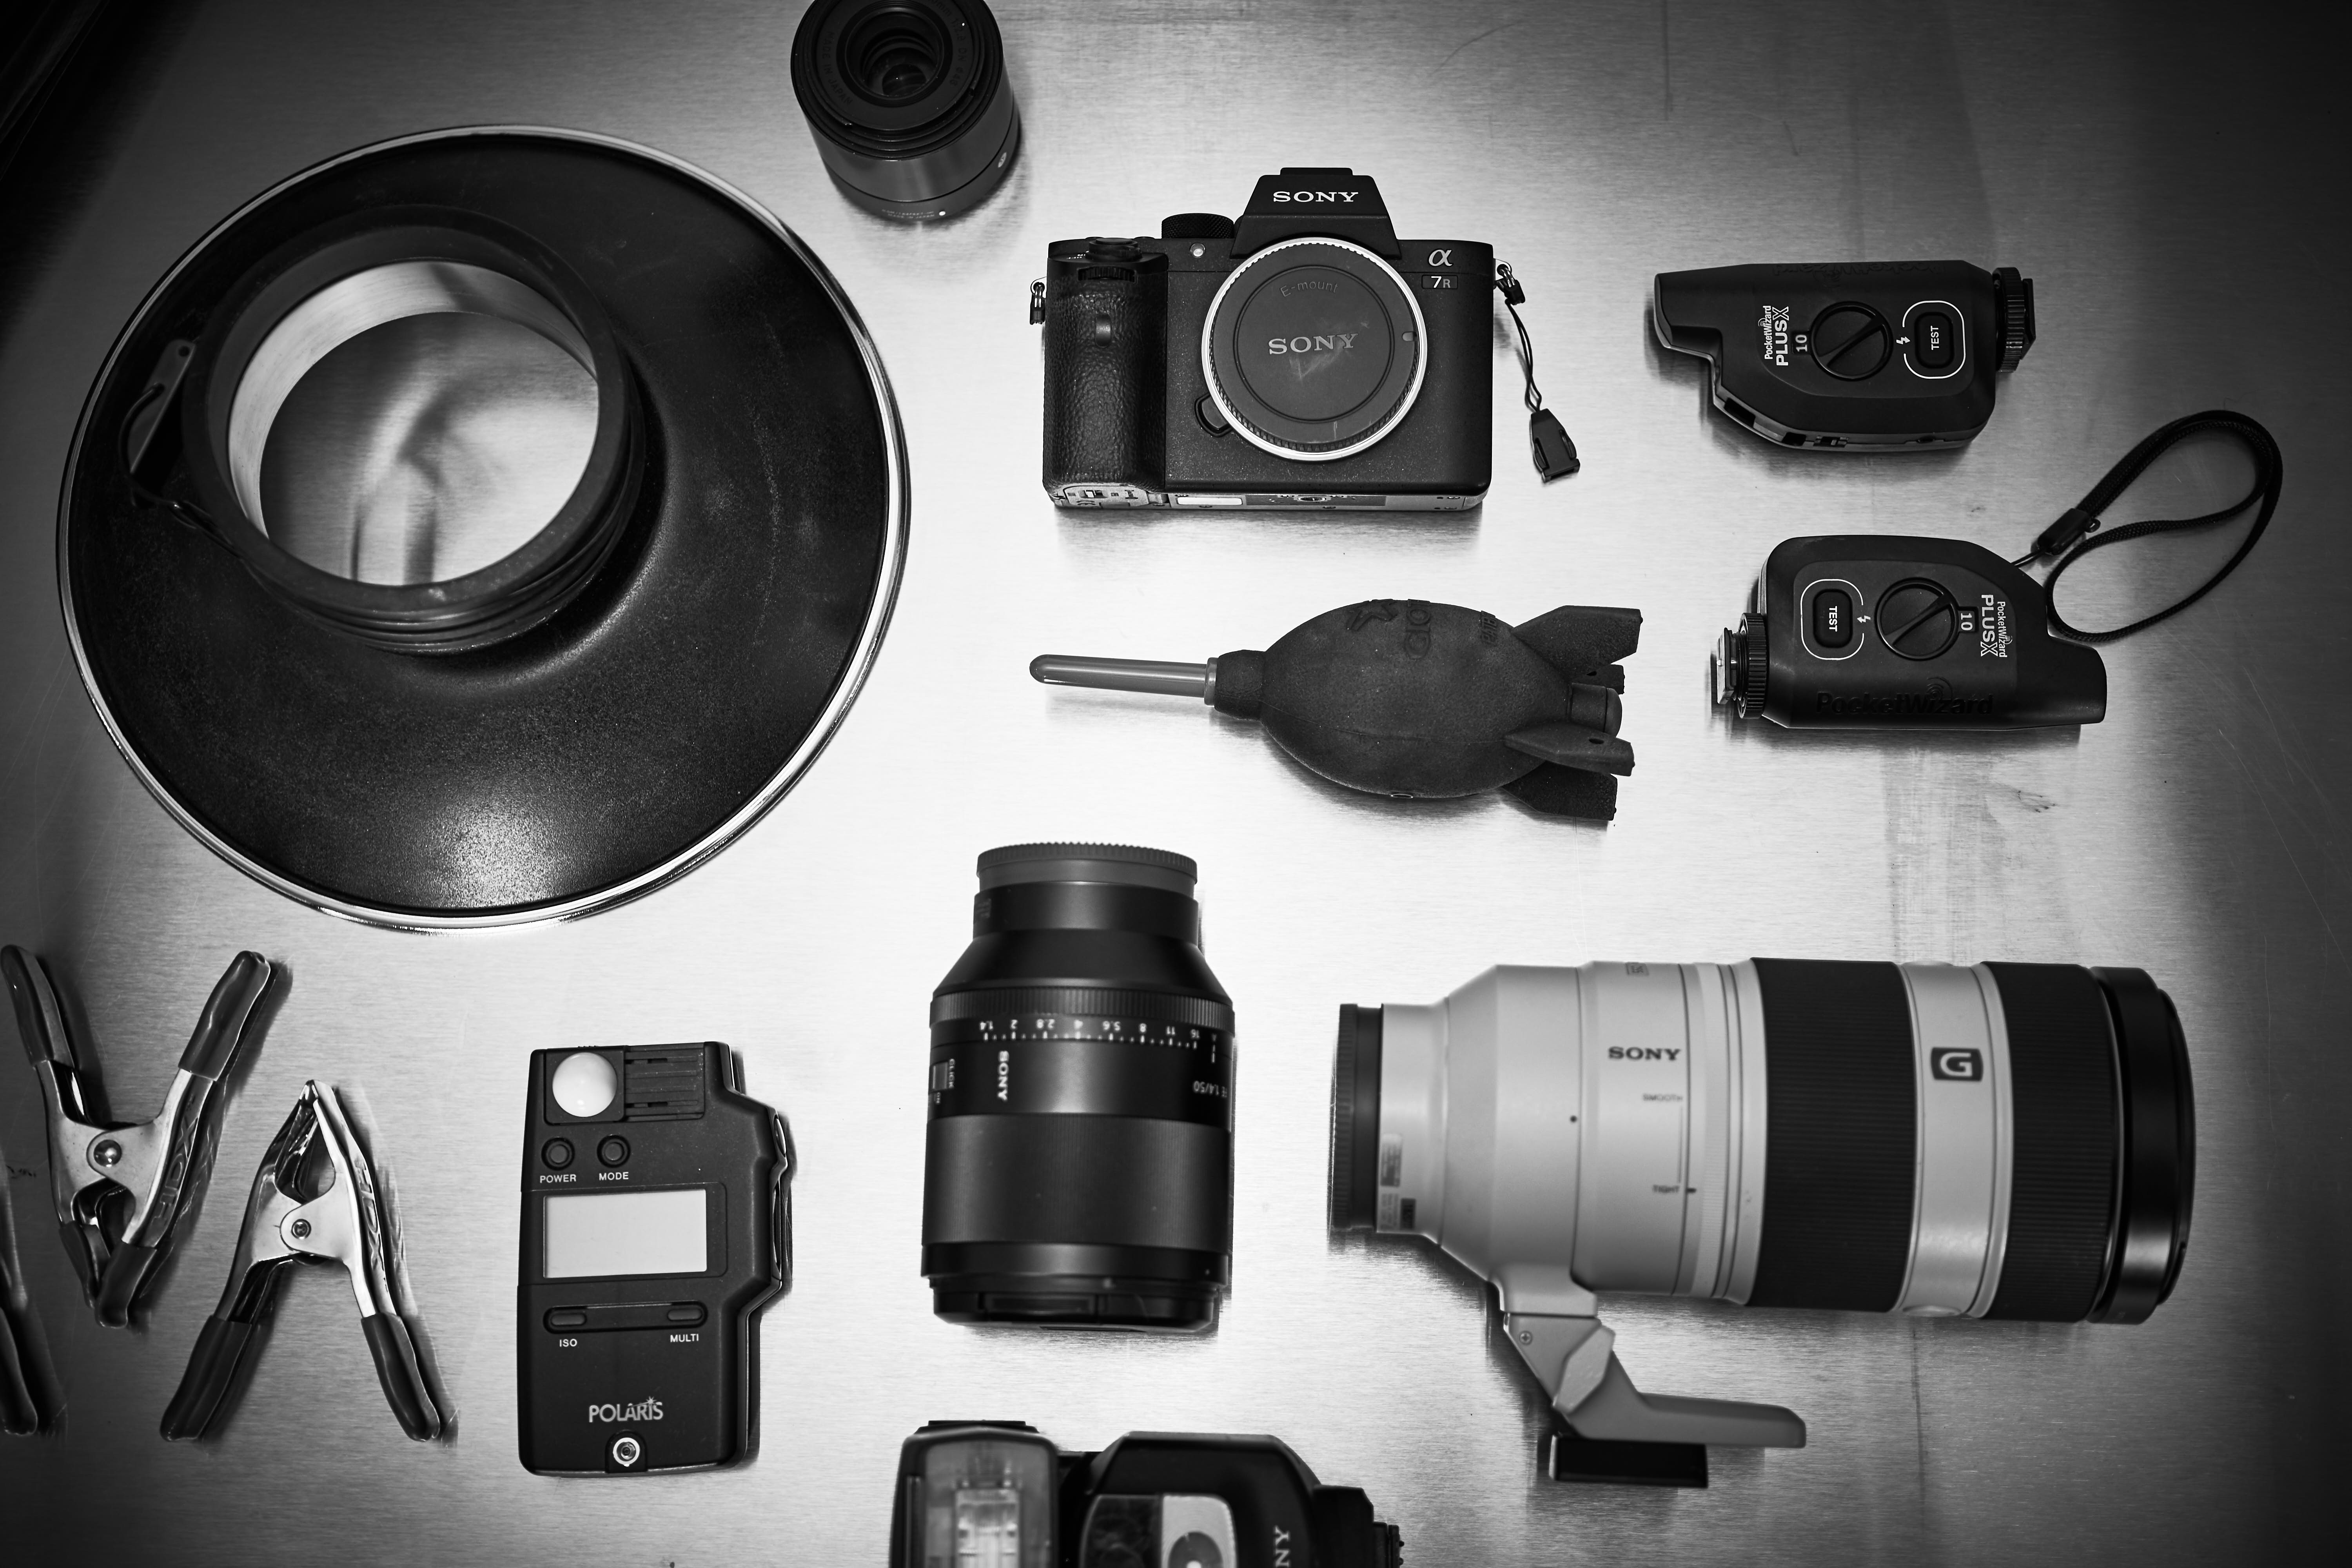 This picture shows Cozzette photography gear